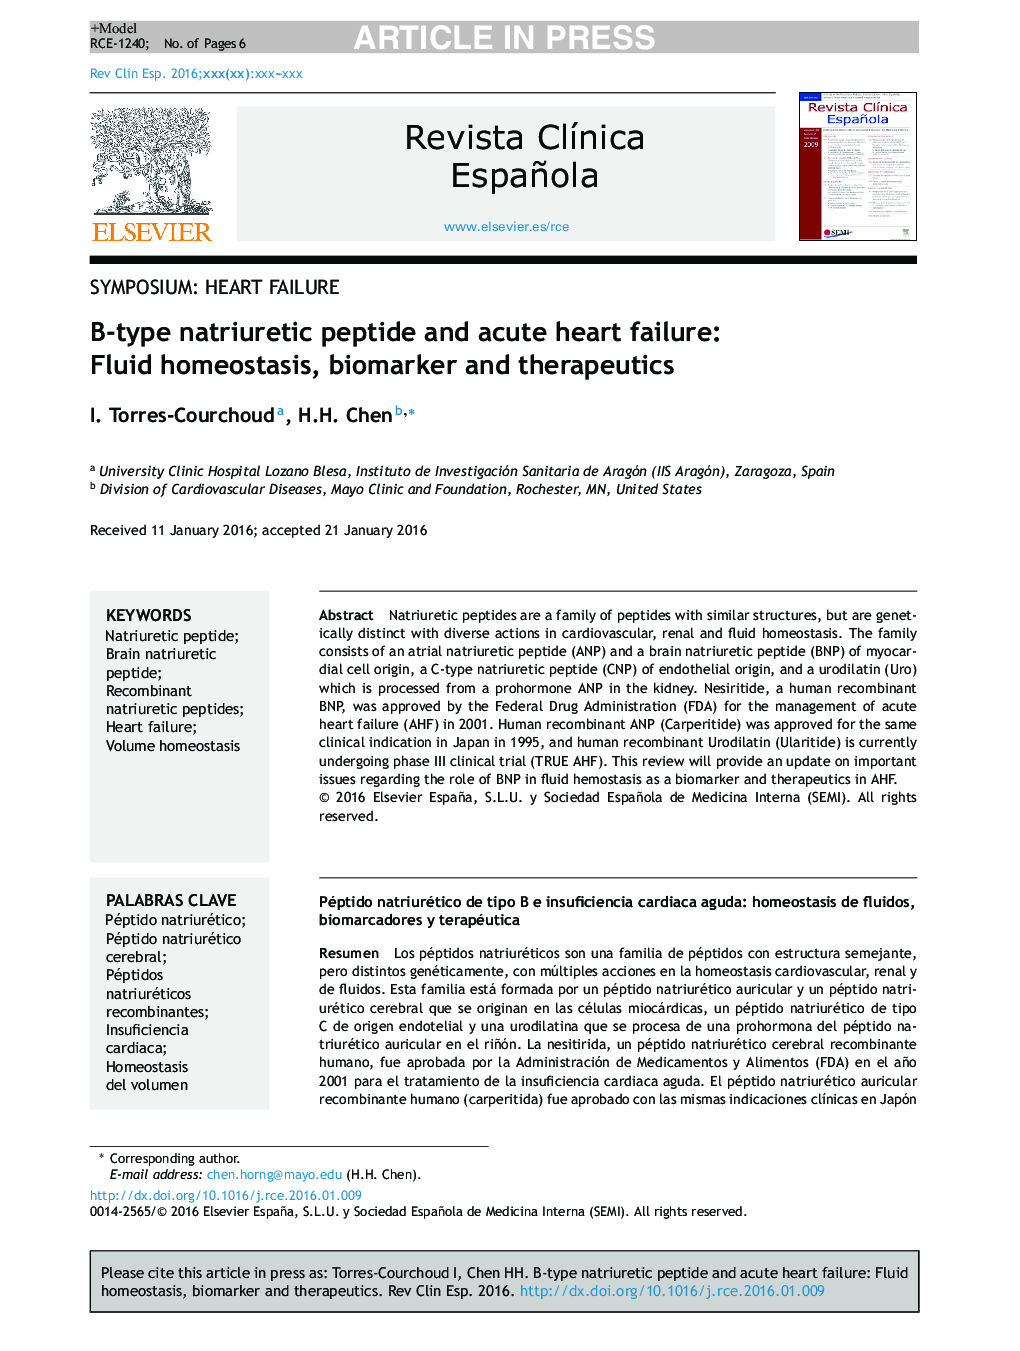 B-type natriuretic peptide and acute heart failure: Fluid homeostasis, biomarker and therapeutics